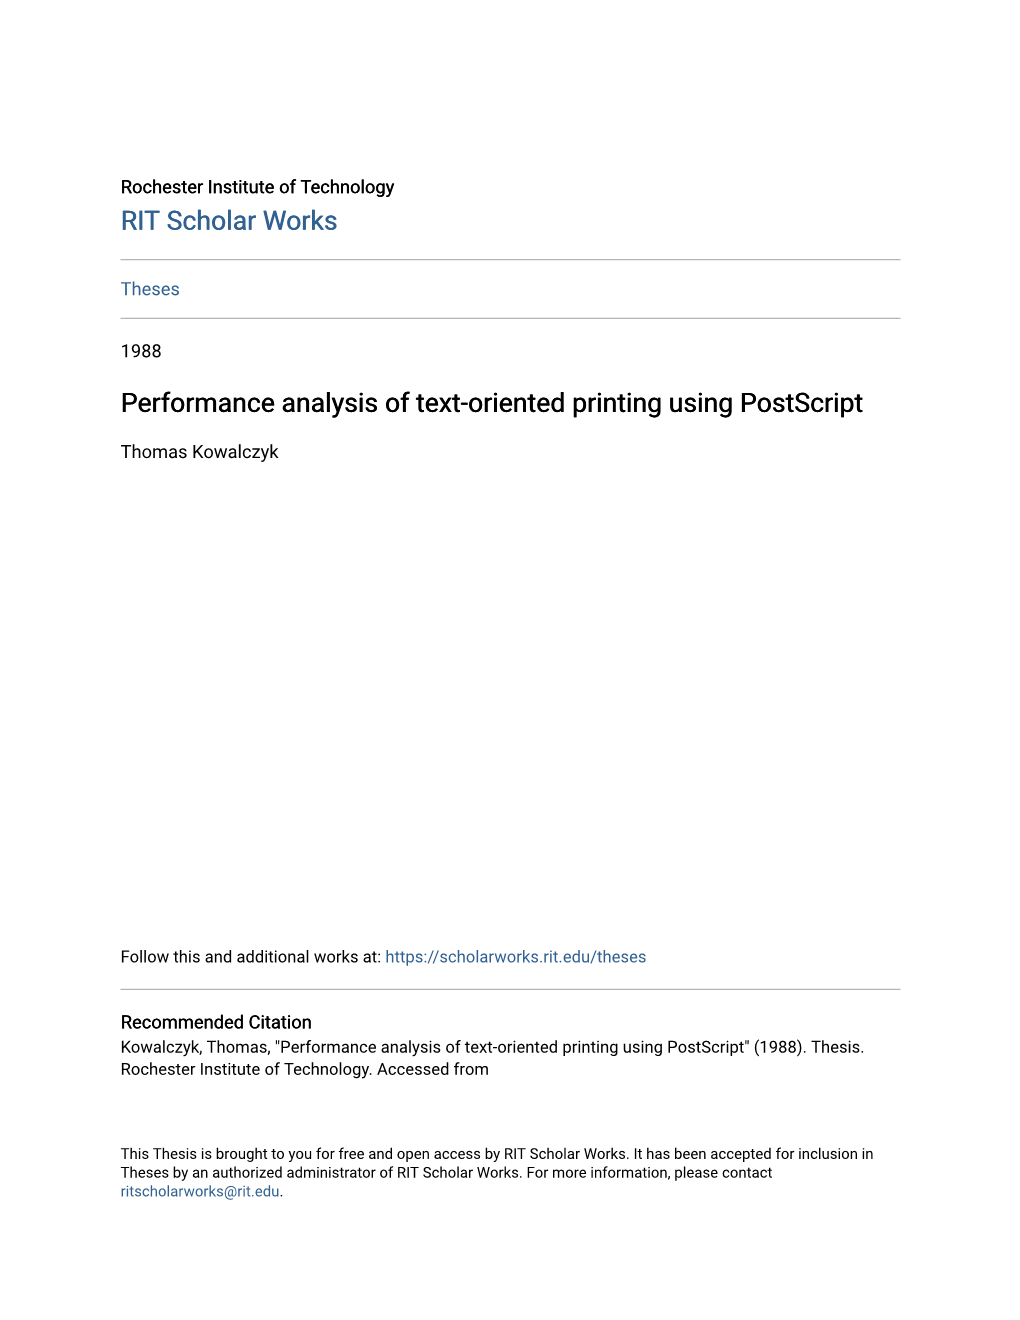 Performance Analysis of Text-Oriented Printing Using Postscript